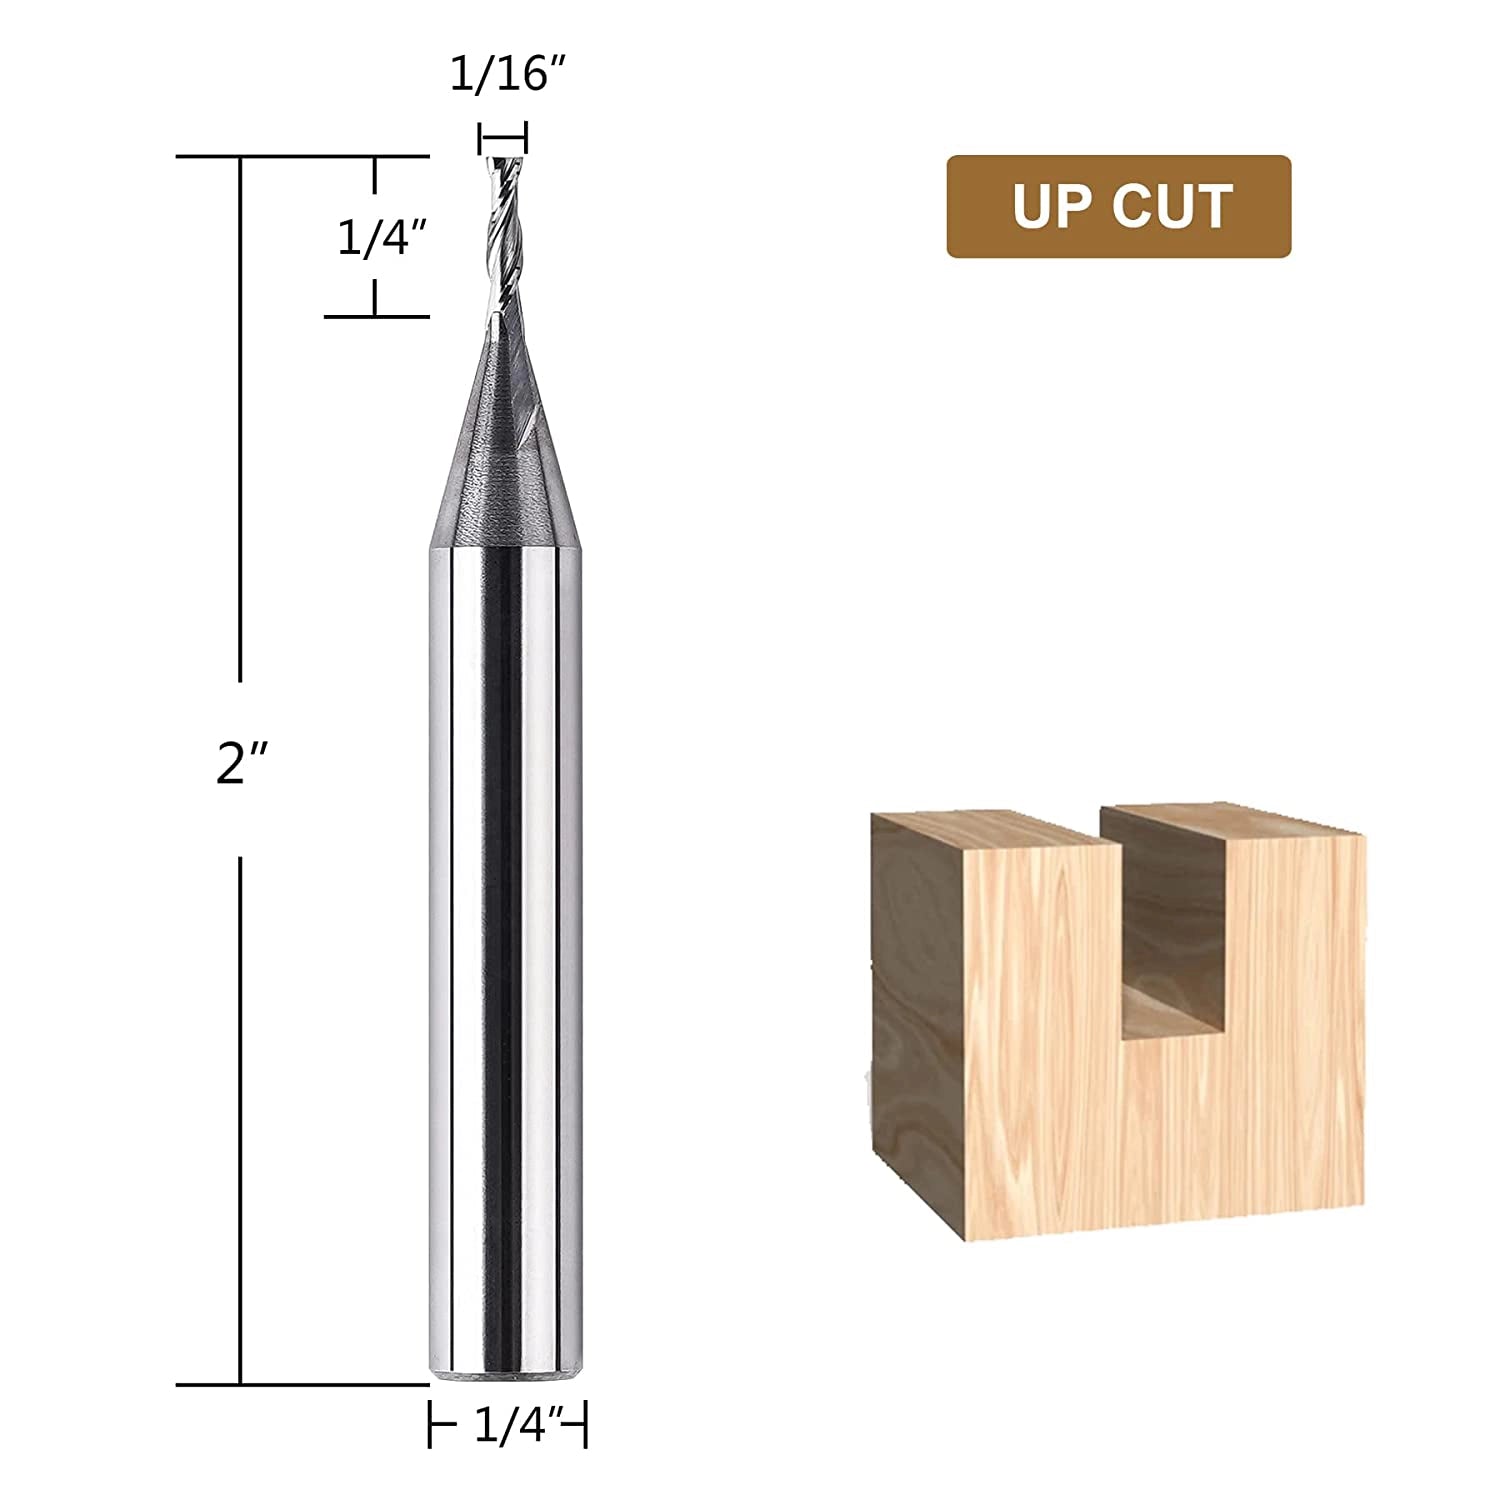 SpeTool 1 16D 1 4 SHK 1 4 Cut Length Woodworking Upcut Routr Bit